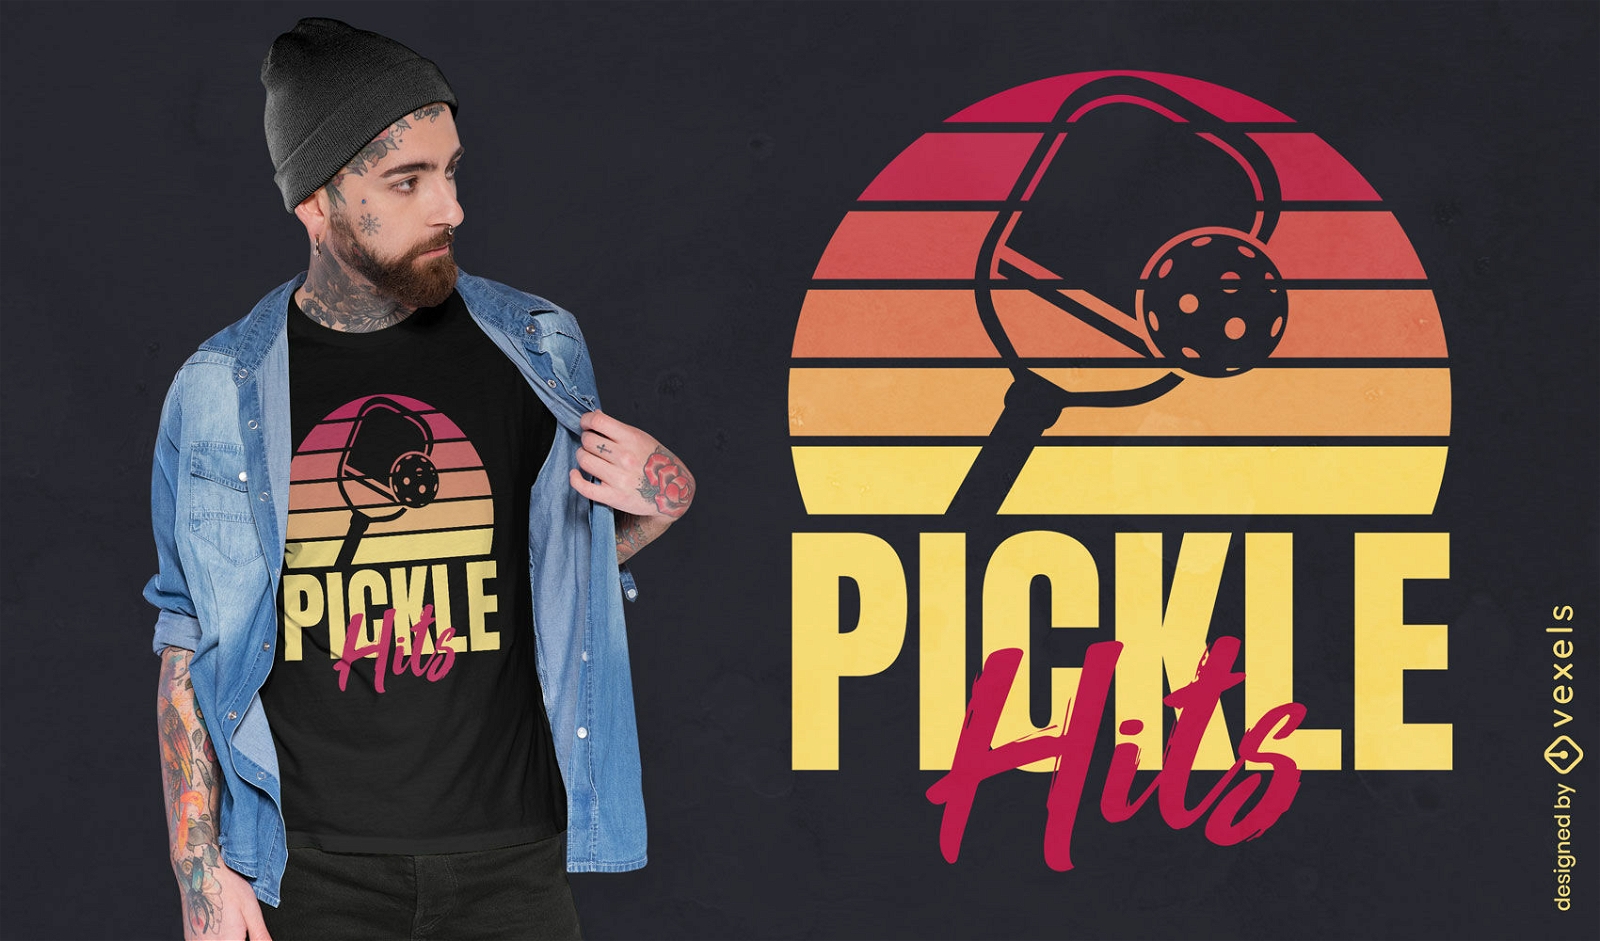 Pickle hits t-shirt design